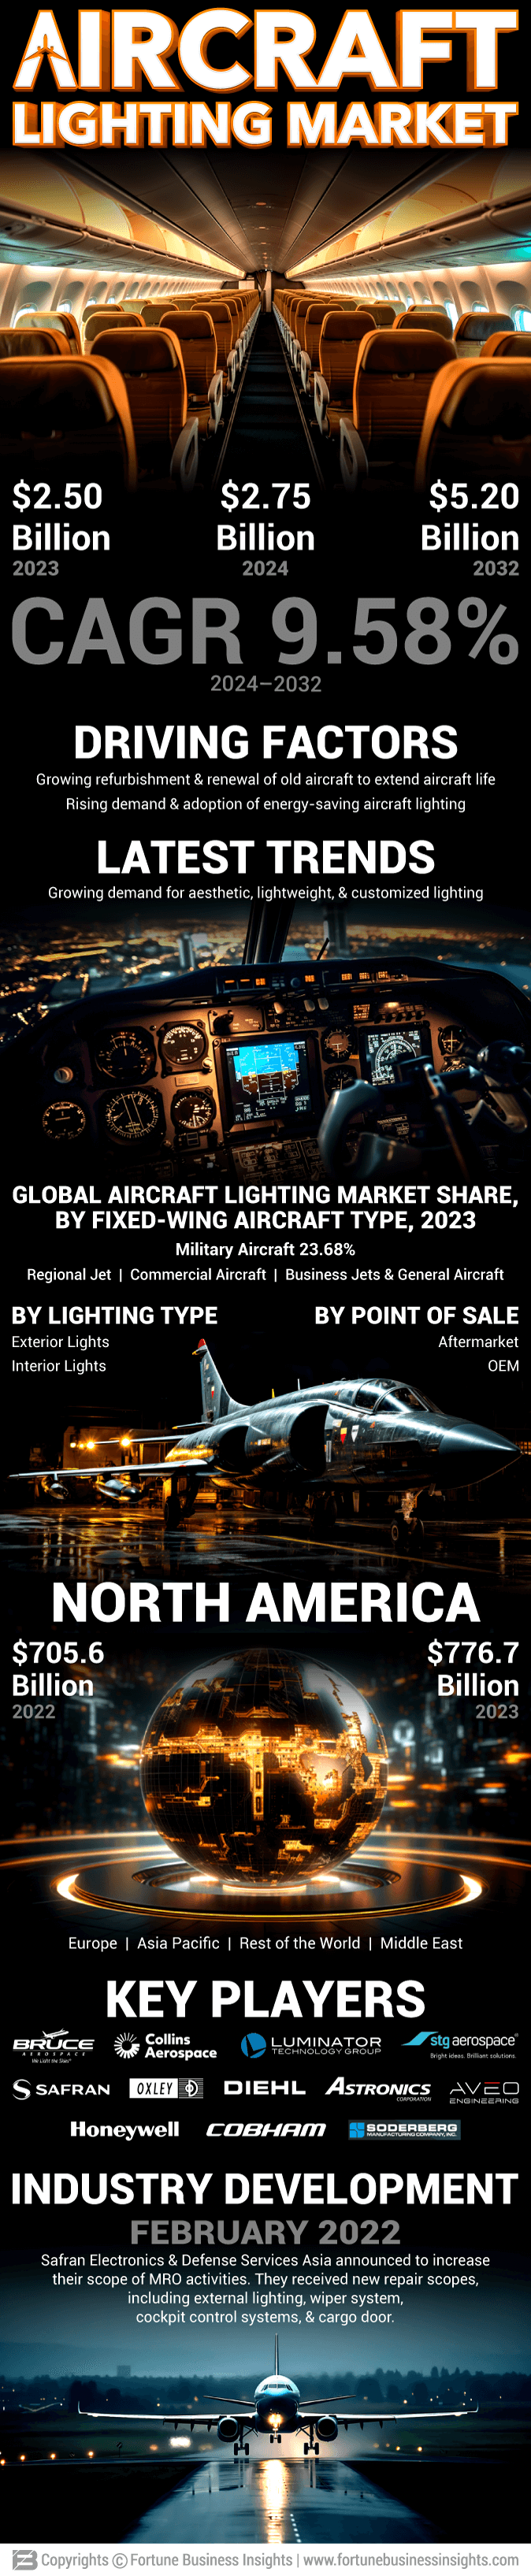 Aircraft Lighting Market 